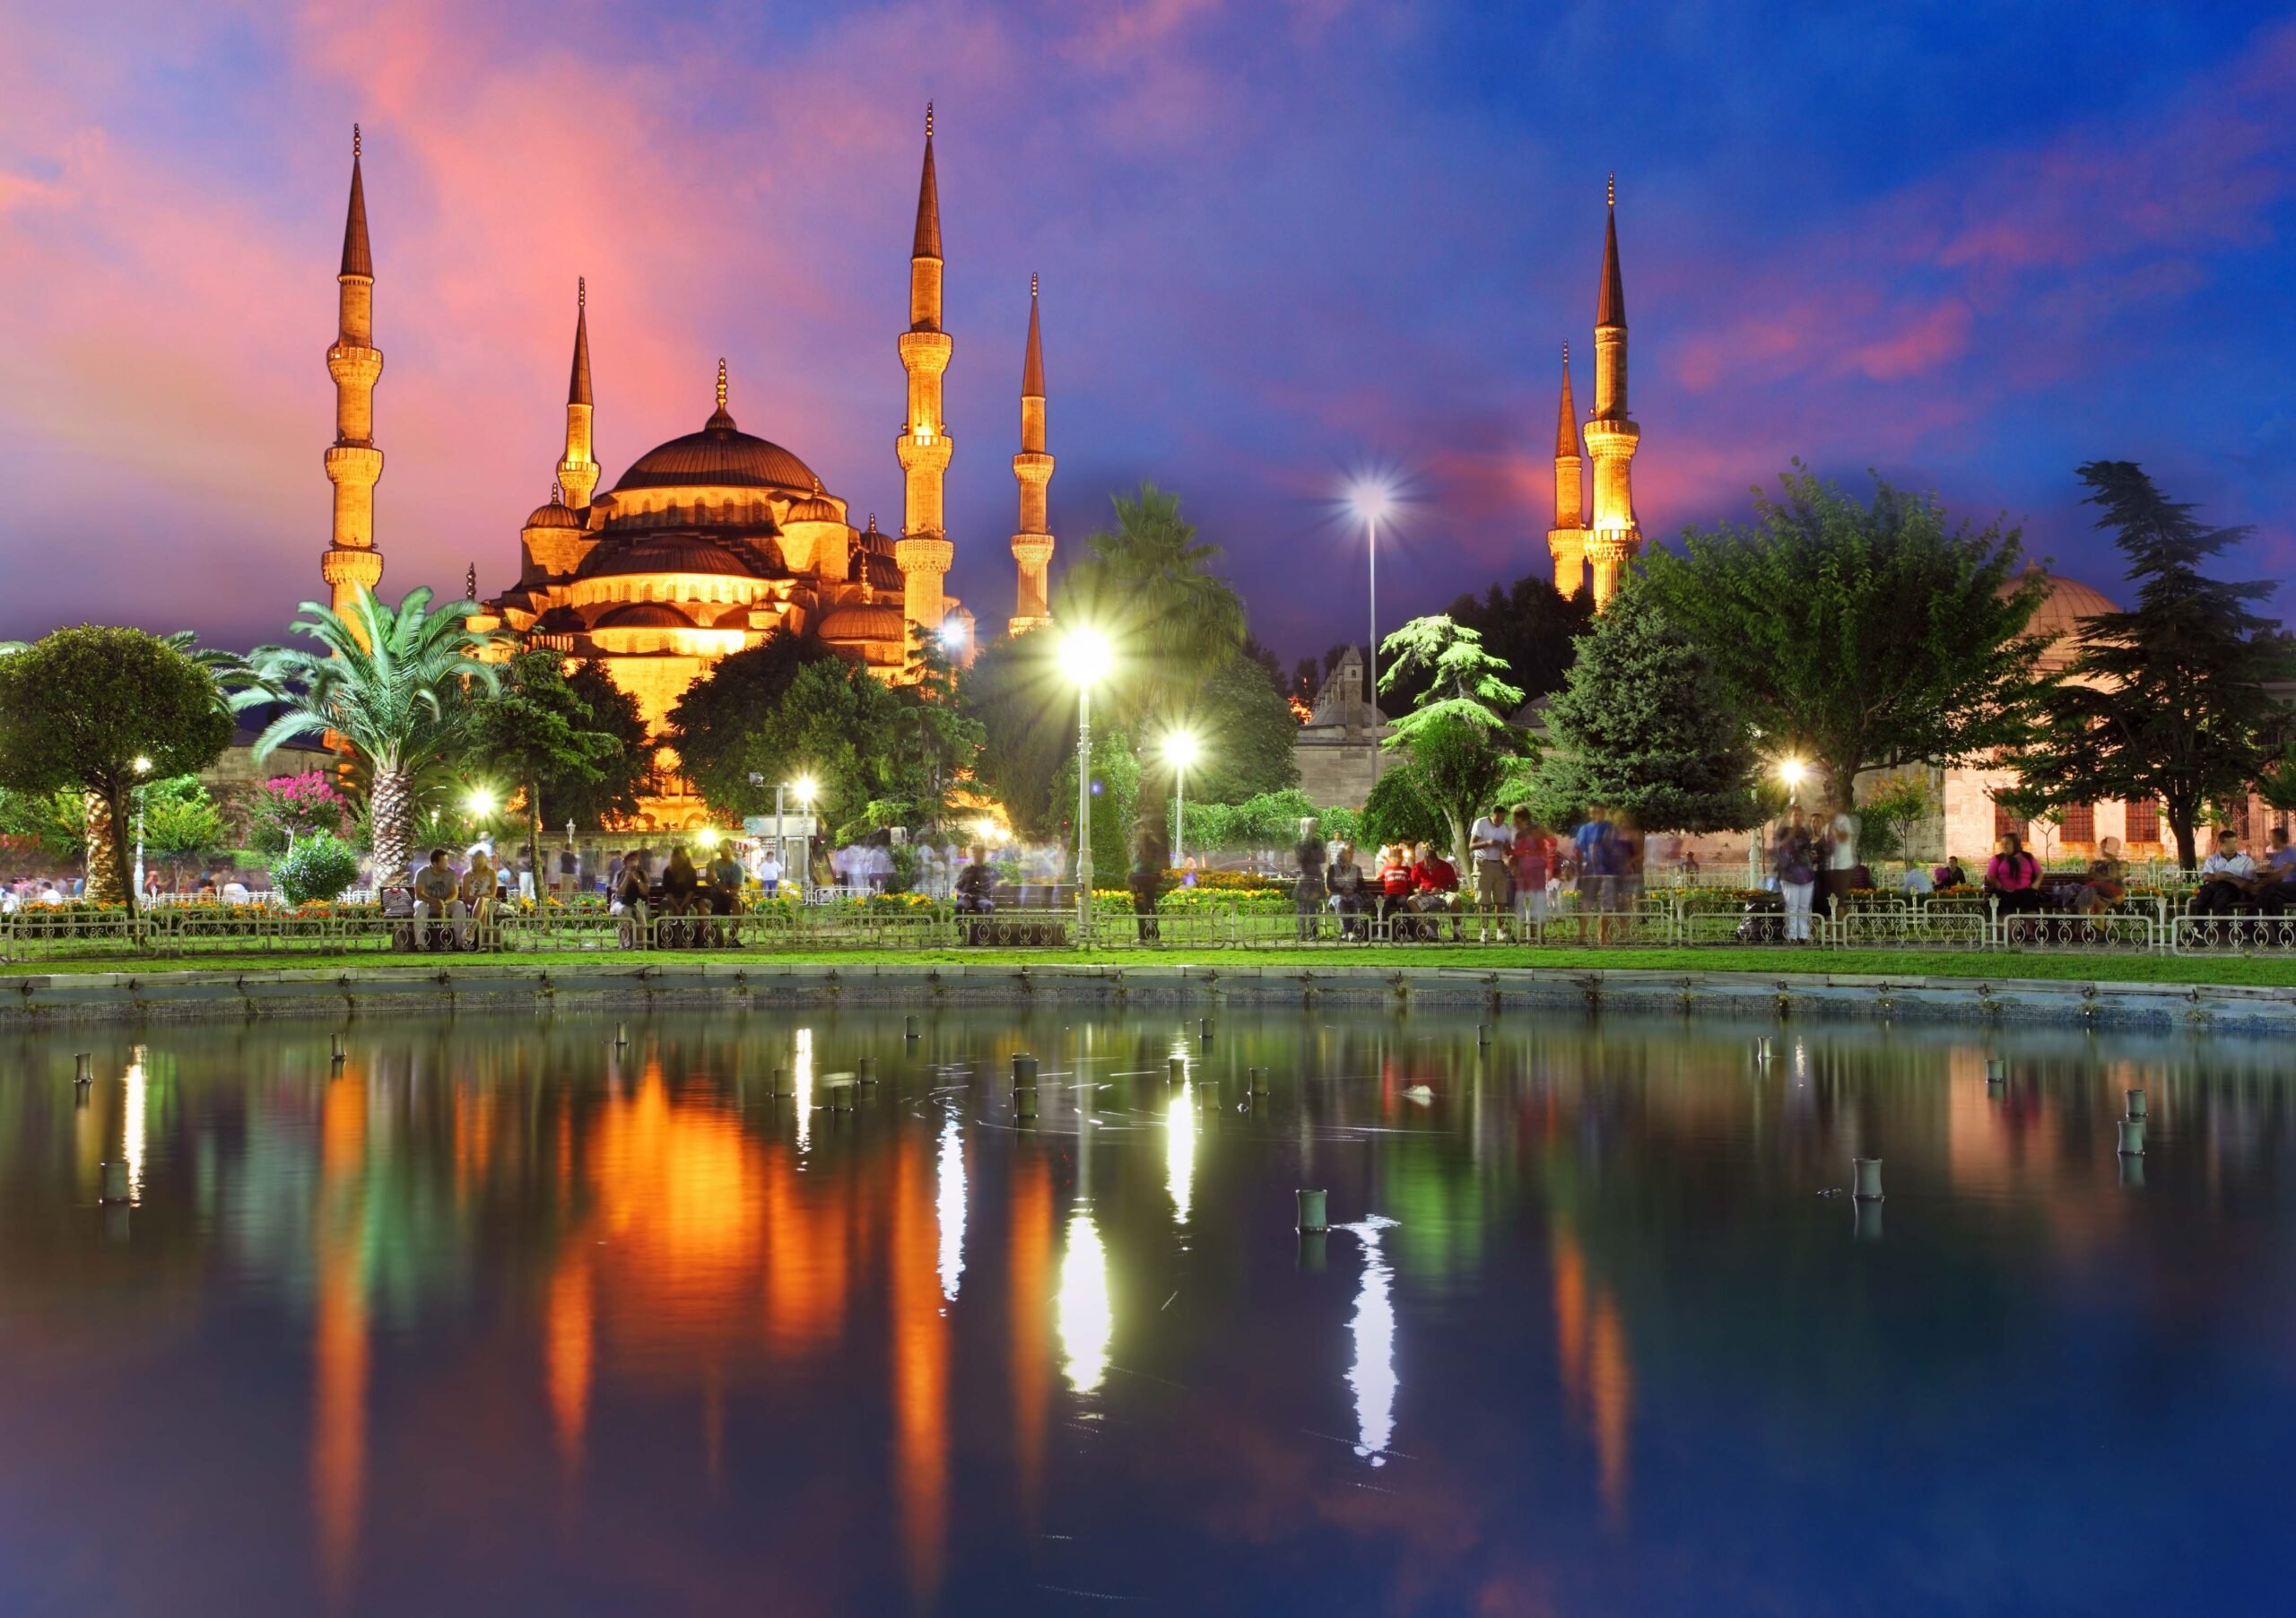 Дорогой город турции. Турция Истамбул. Туреччина Стамбул. Турция Истанбул Анкара. Джамлыджа Стамбул.